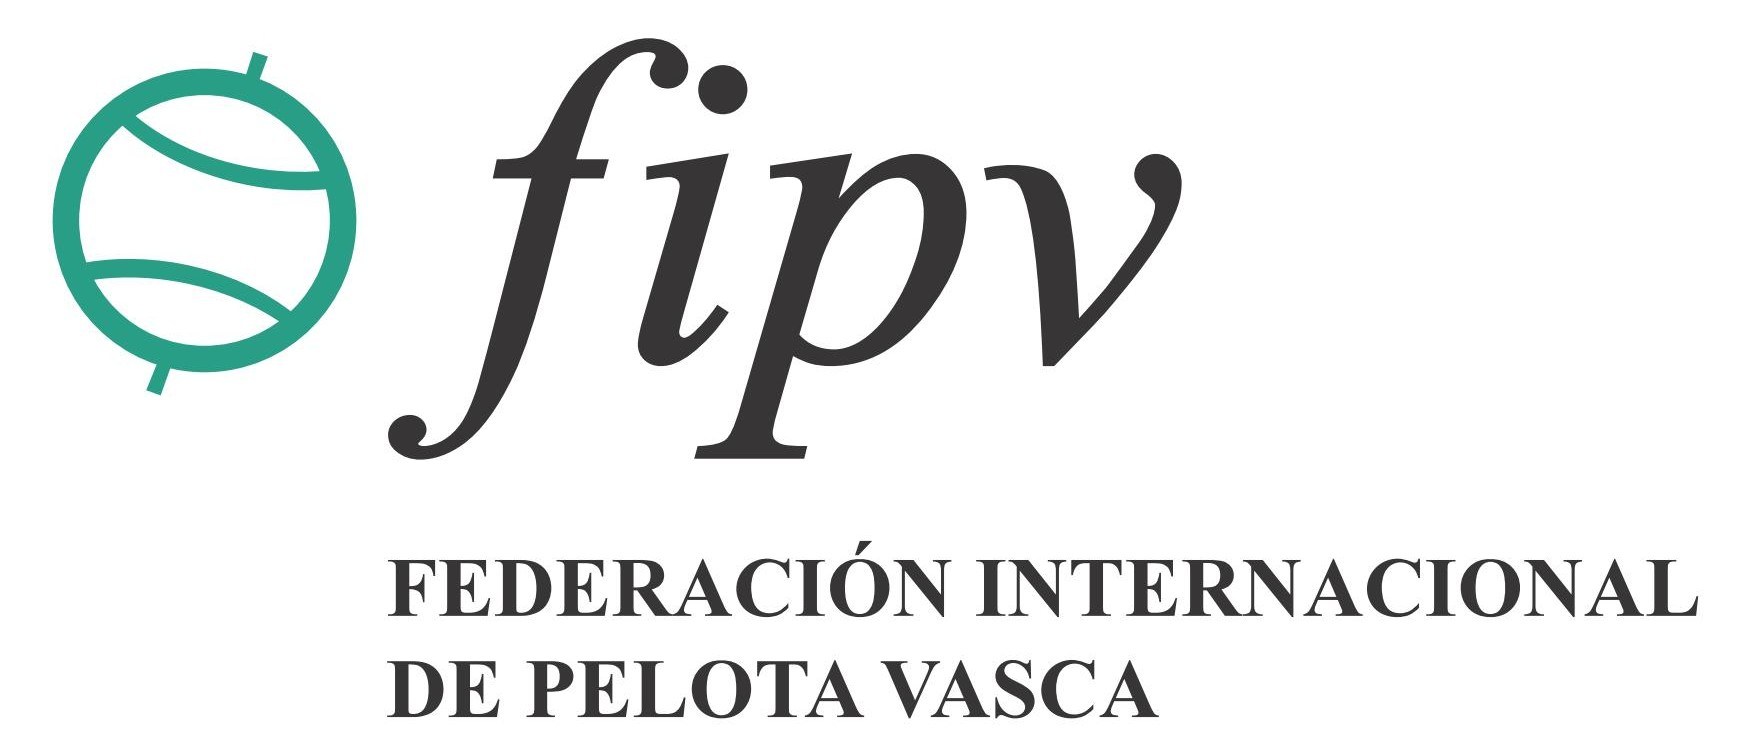 Fédération Internationale de Pelota Vasca (FIPV) Logo [EPS File]